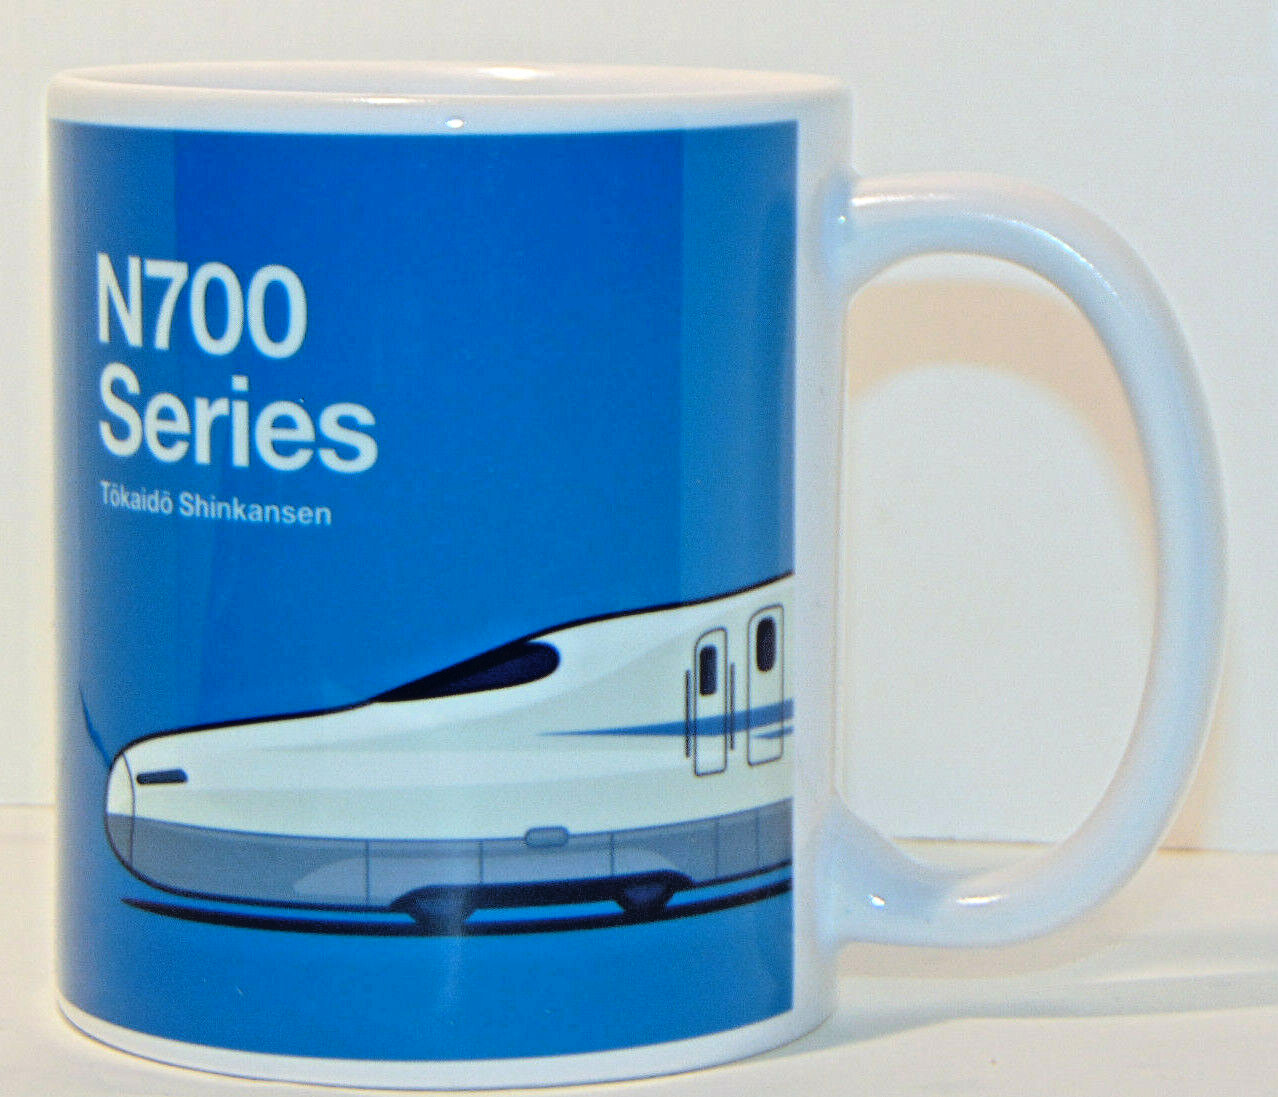 NEW N700 SERIES TOKAIDO SHINKANSEN COFFEE MUG/CUP GREAT GRAPHICS BULLET TRAIN